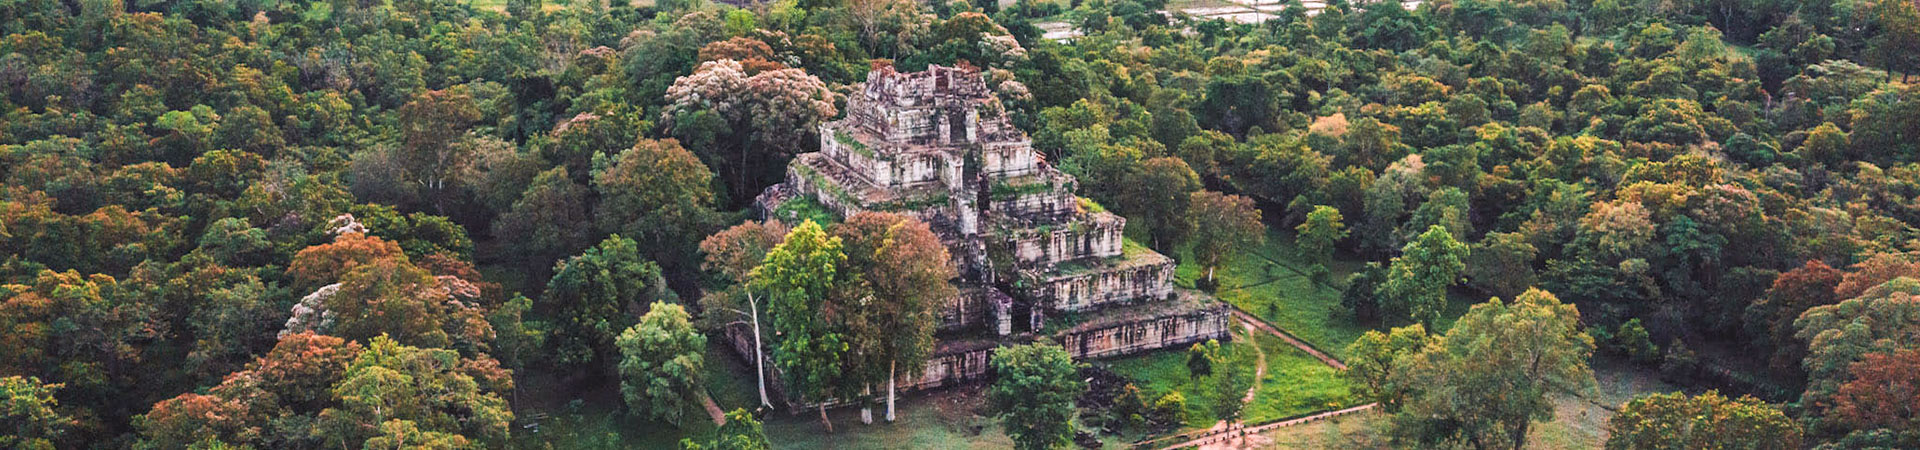 Visit Koh Ker - The UNESCO World Heritage List